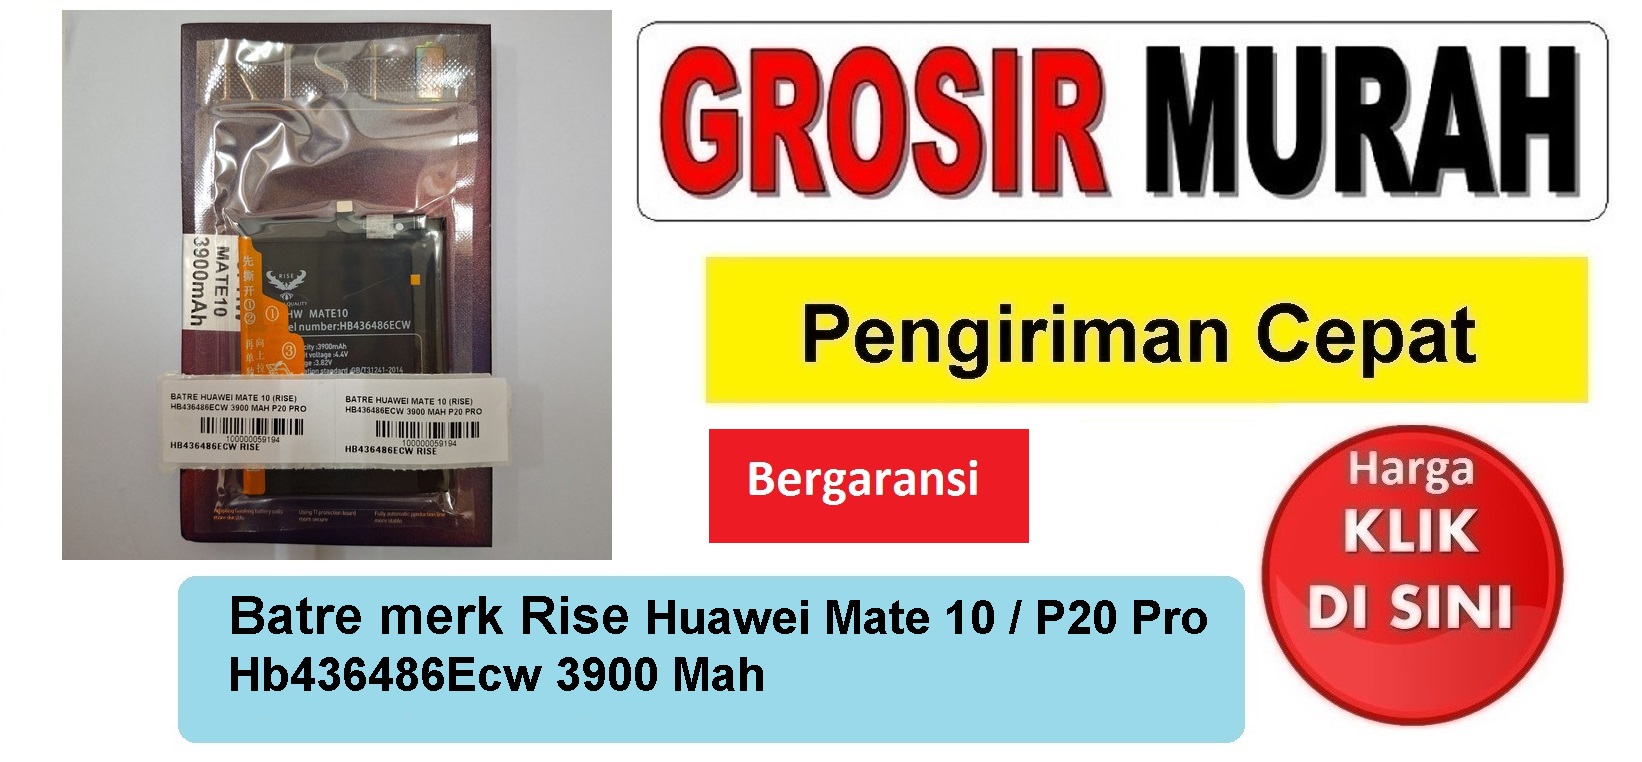 Batre merk Rise Huawei Mate 10 Hb436486Ecw 3900 Mah P20 Pro Baterai Battery Bergaransi Batere